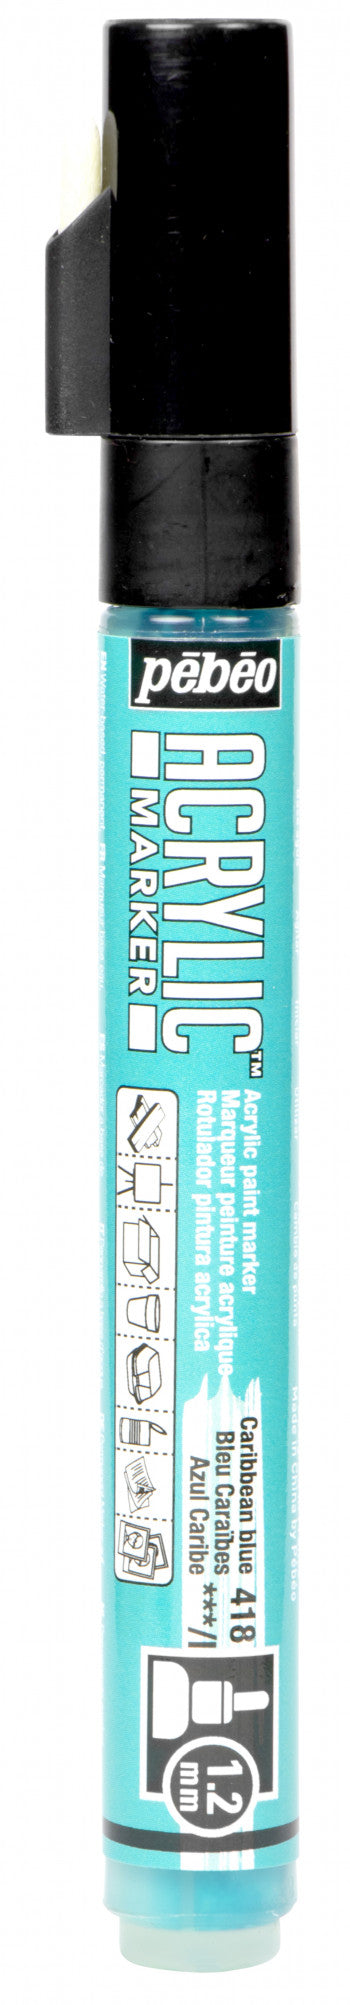 Acrylic Marker 1.2mm Pebeo   Bleu caraibes